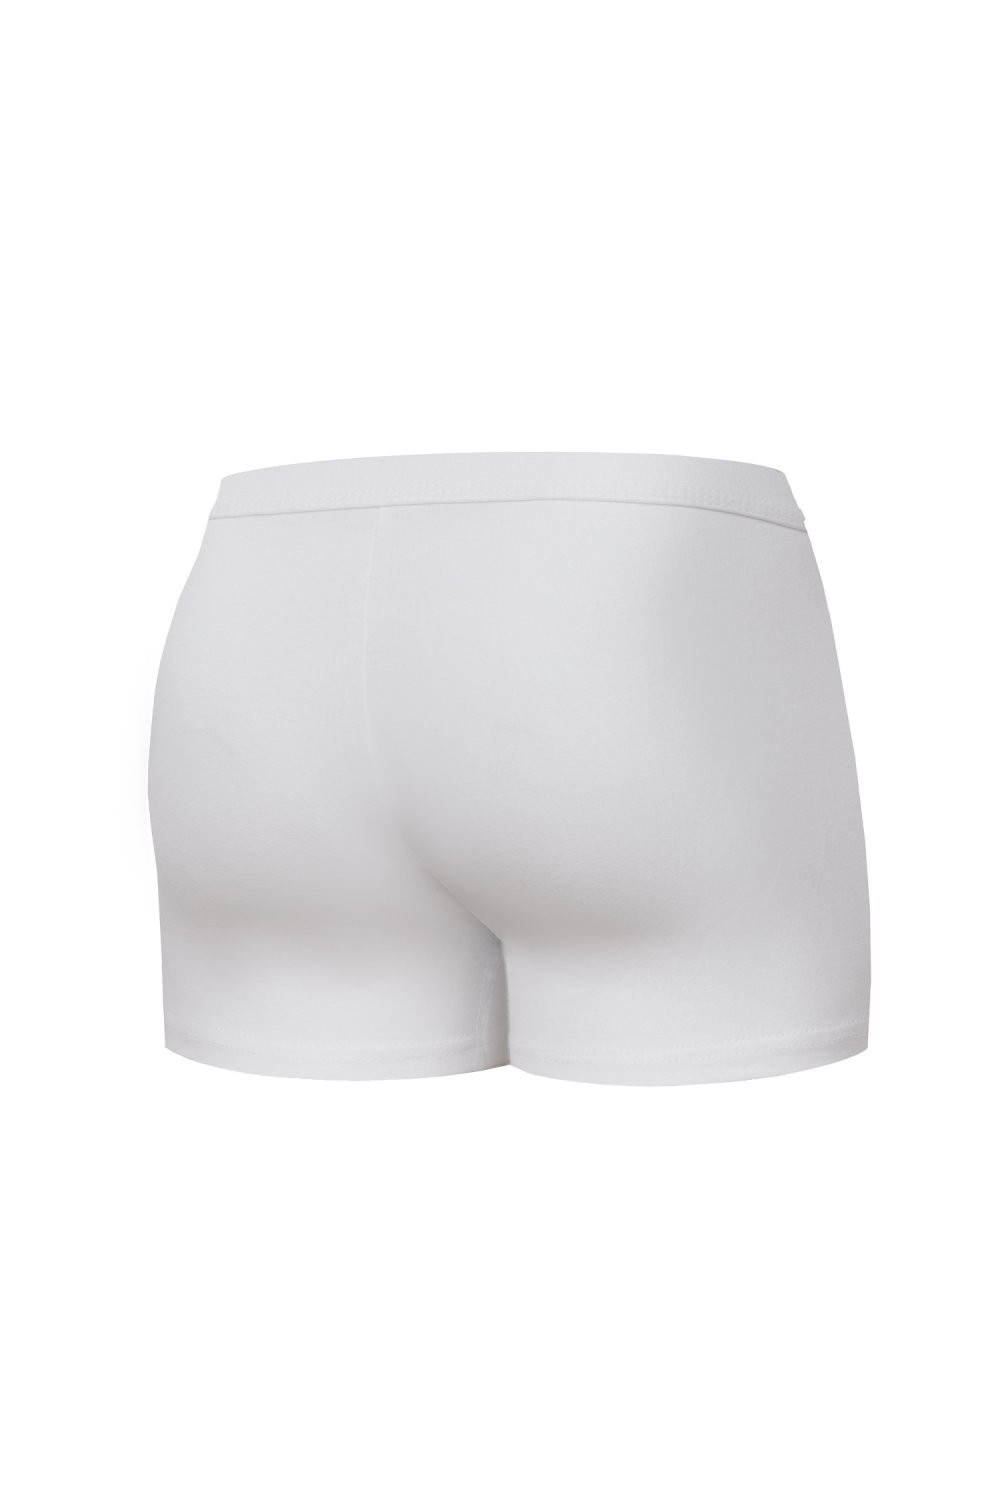 Pánské boxerky 223 Authentic mini white - CORNETTE S